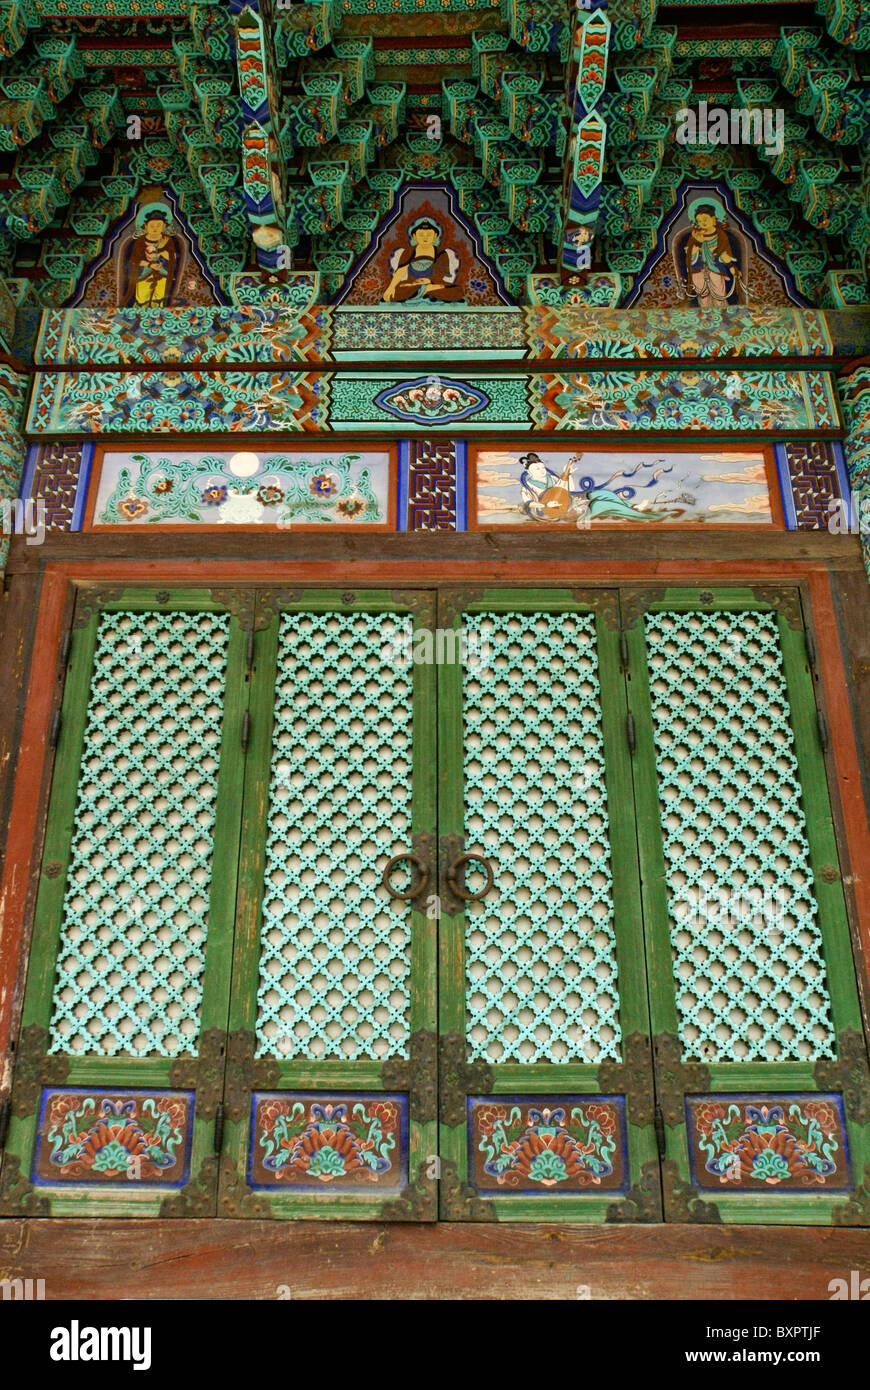 Colorful doors and eaves, Seonamsa Buddhist temple, South Korea Stock Photo